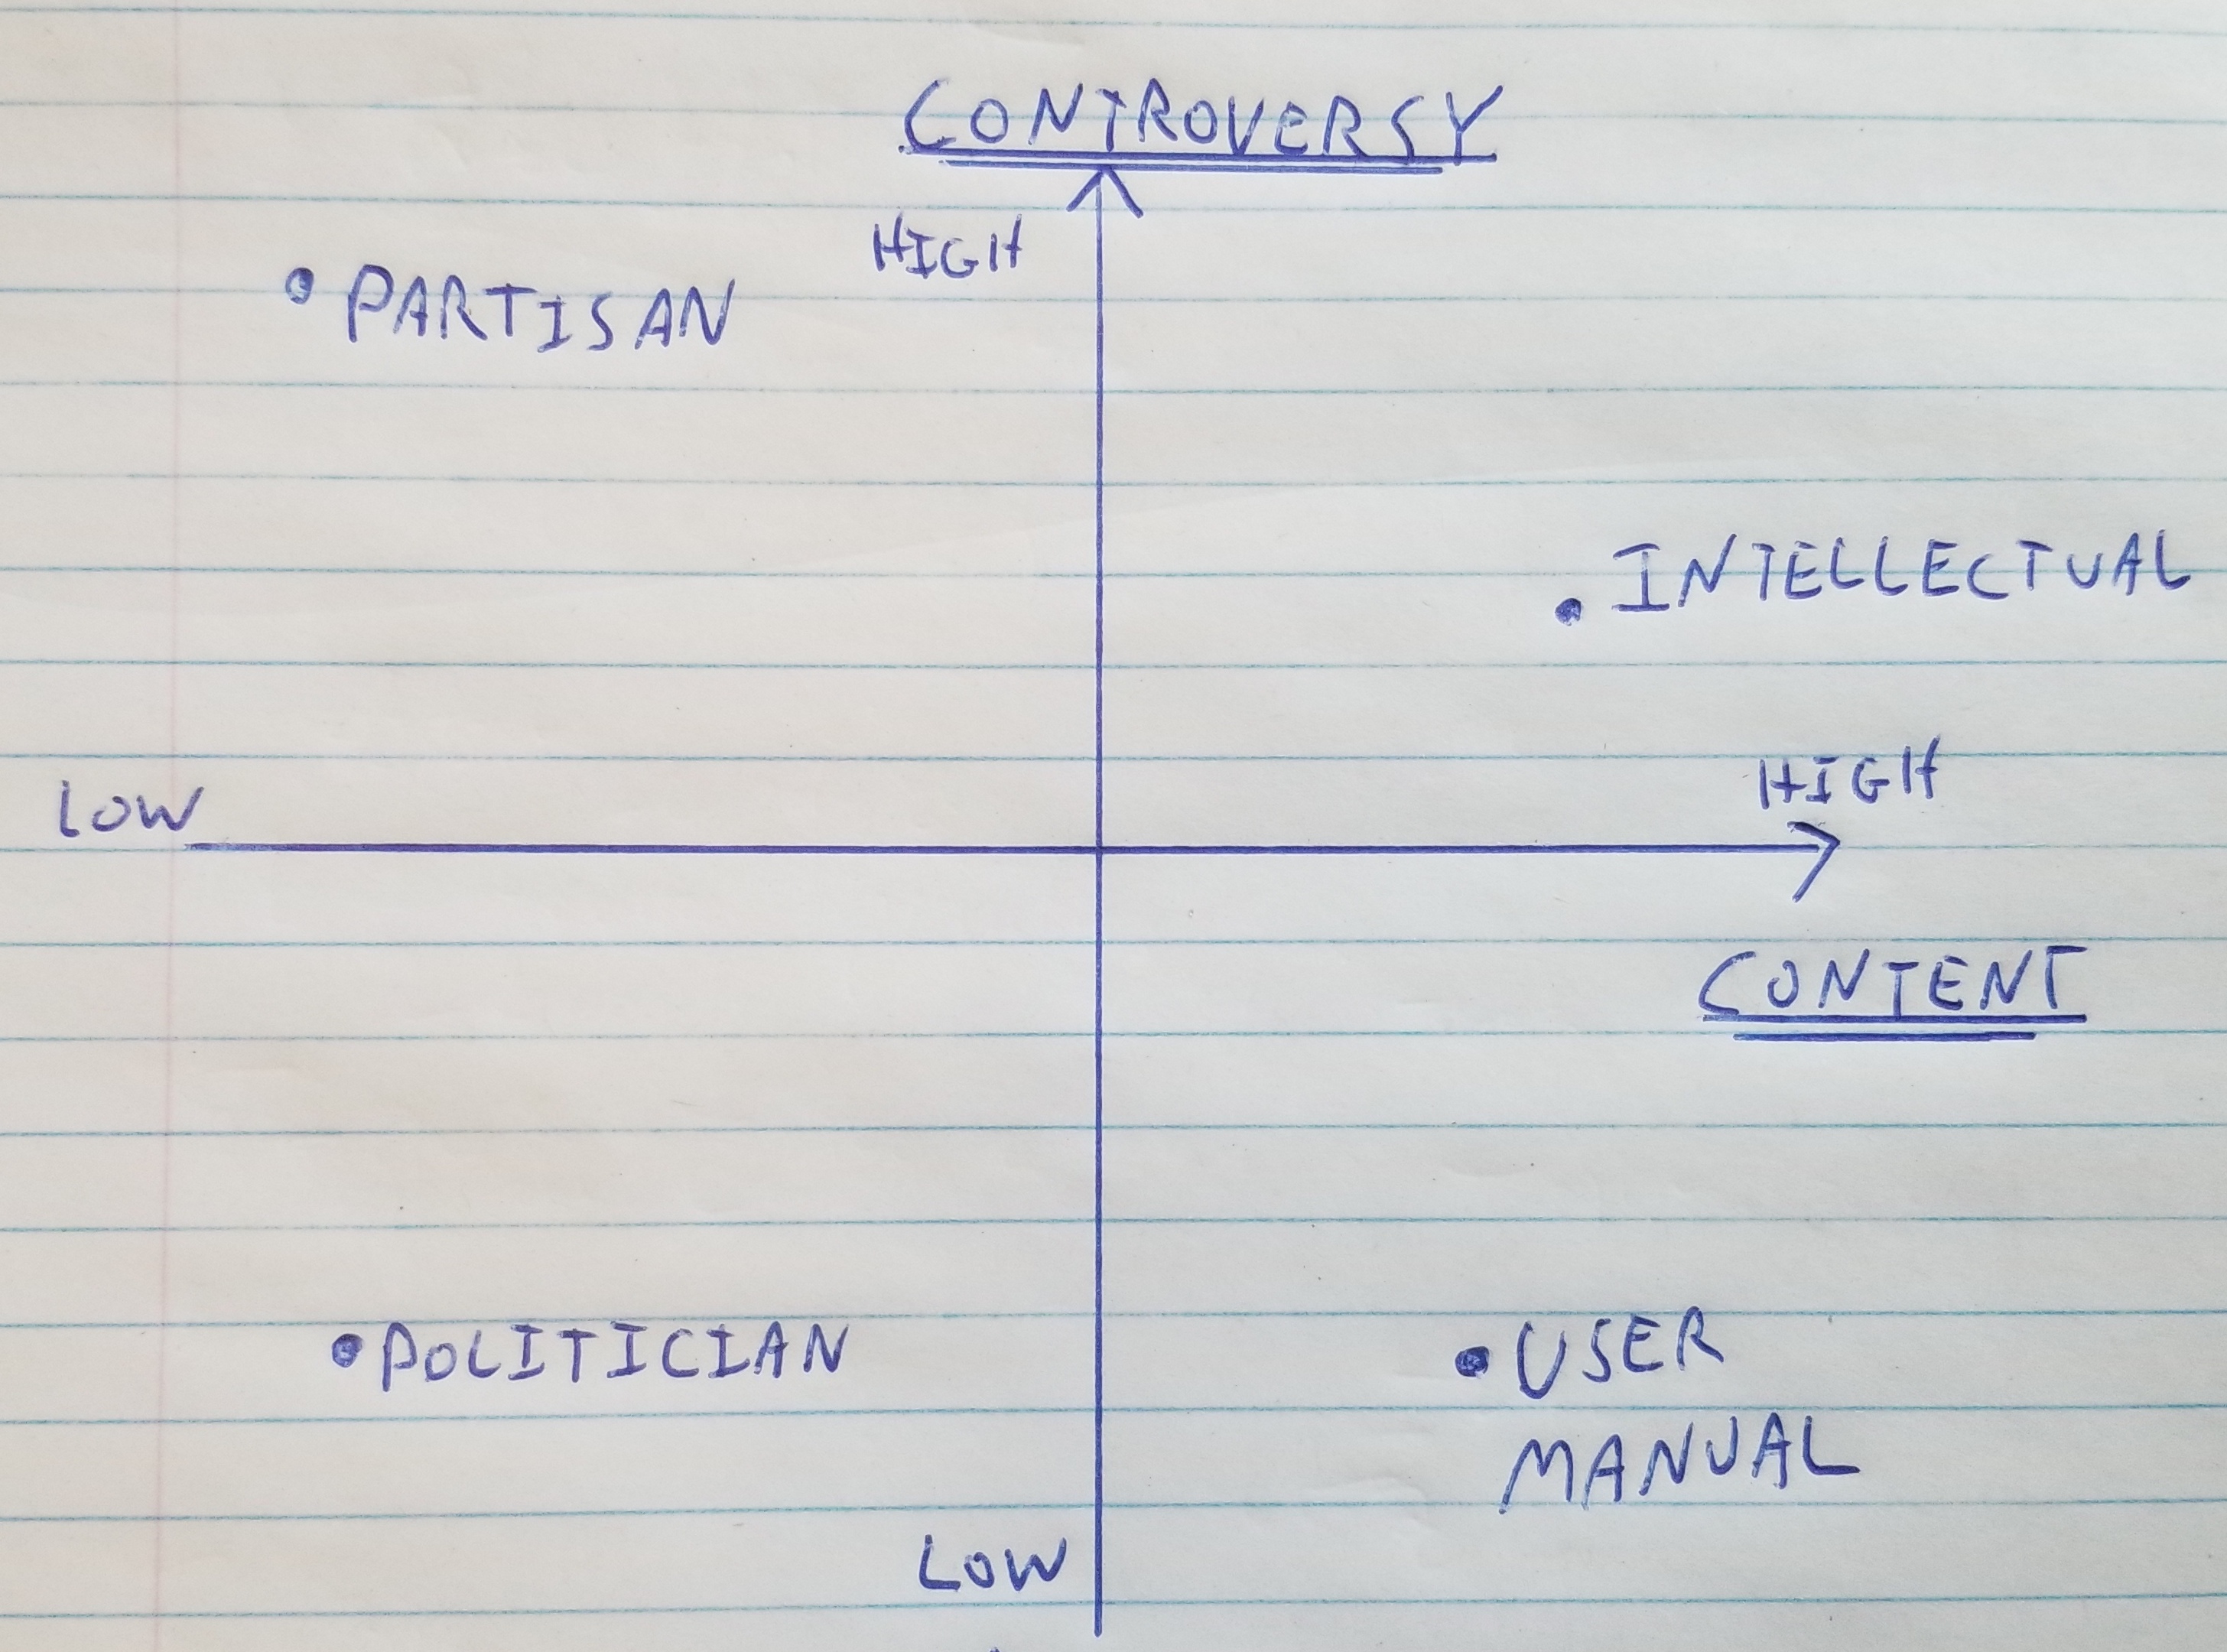 Controversy vs. Content framework